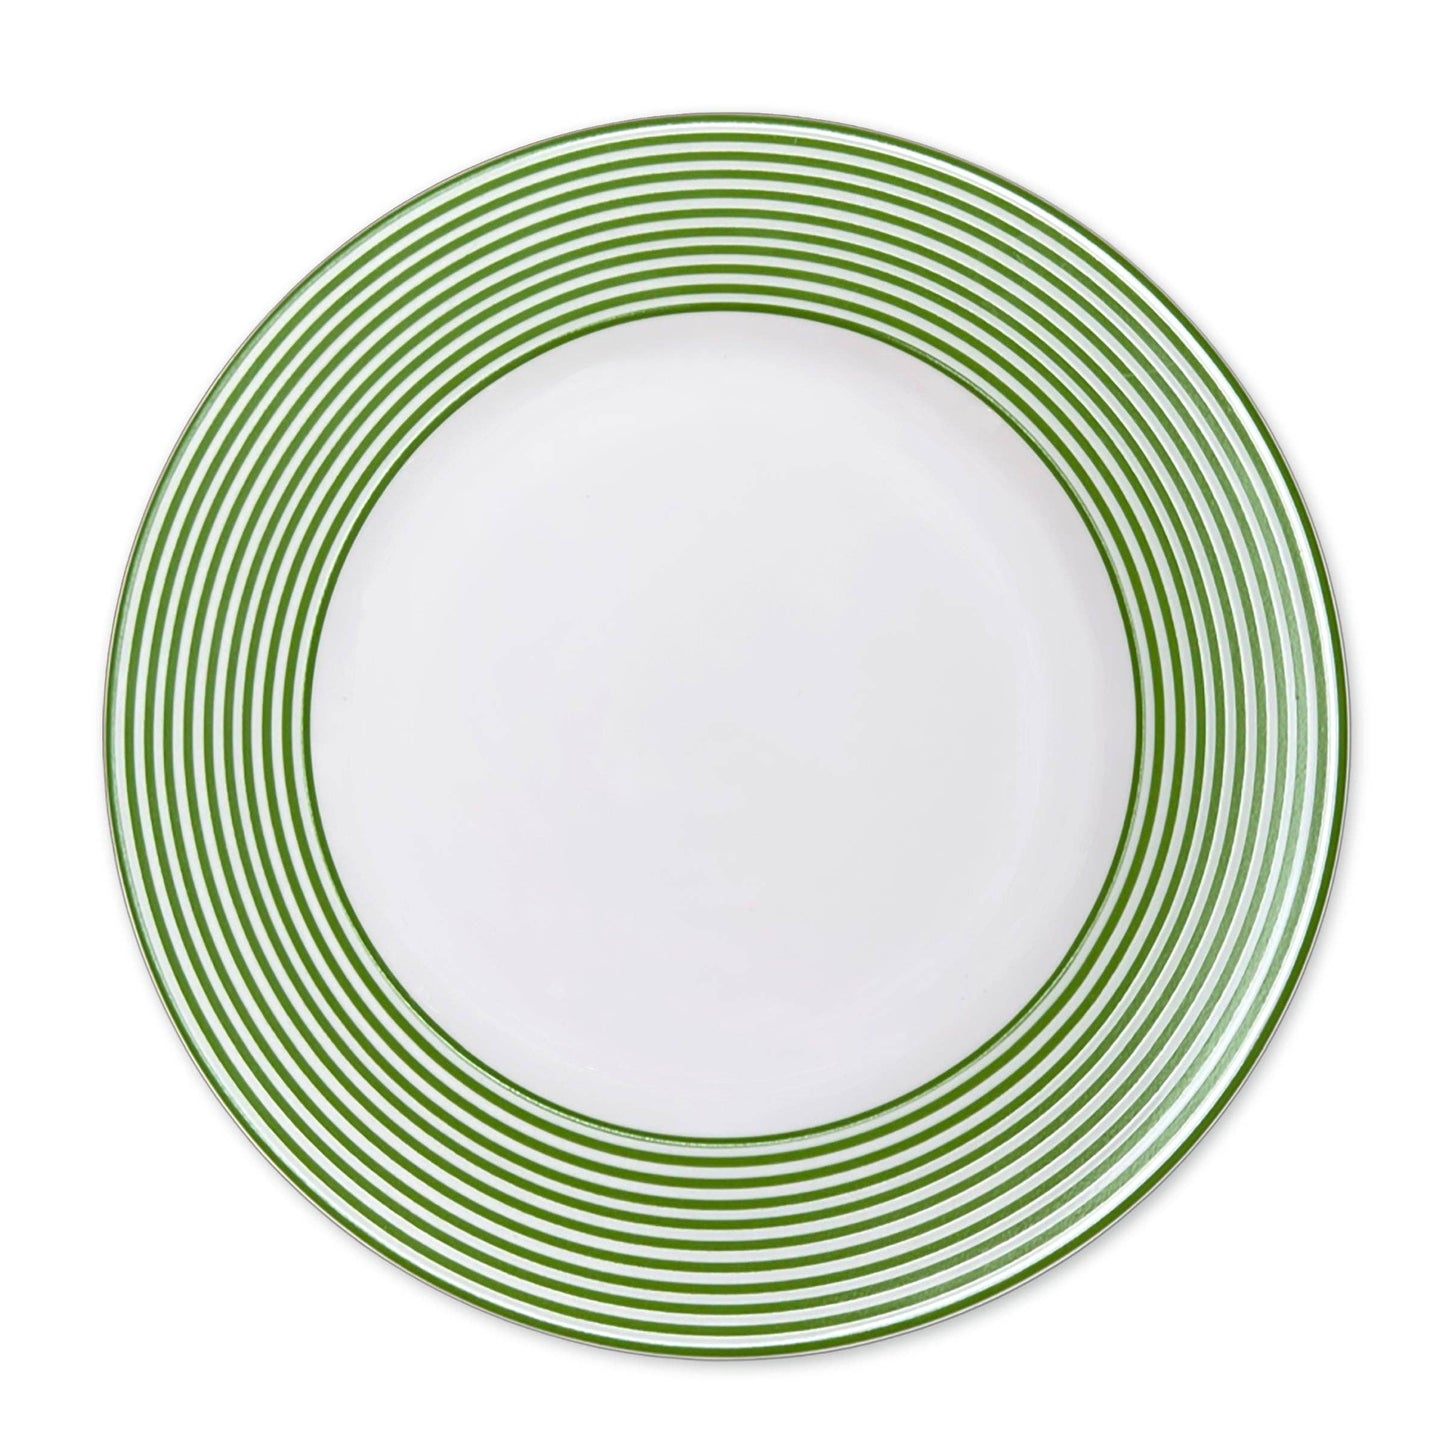 NEWPORT GREEN STRIPE DINNER PLATE (SET OF 4)